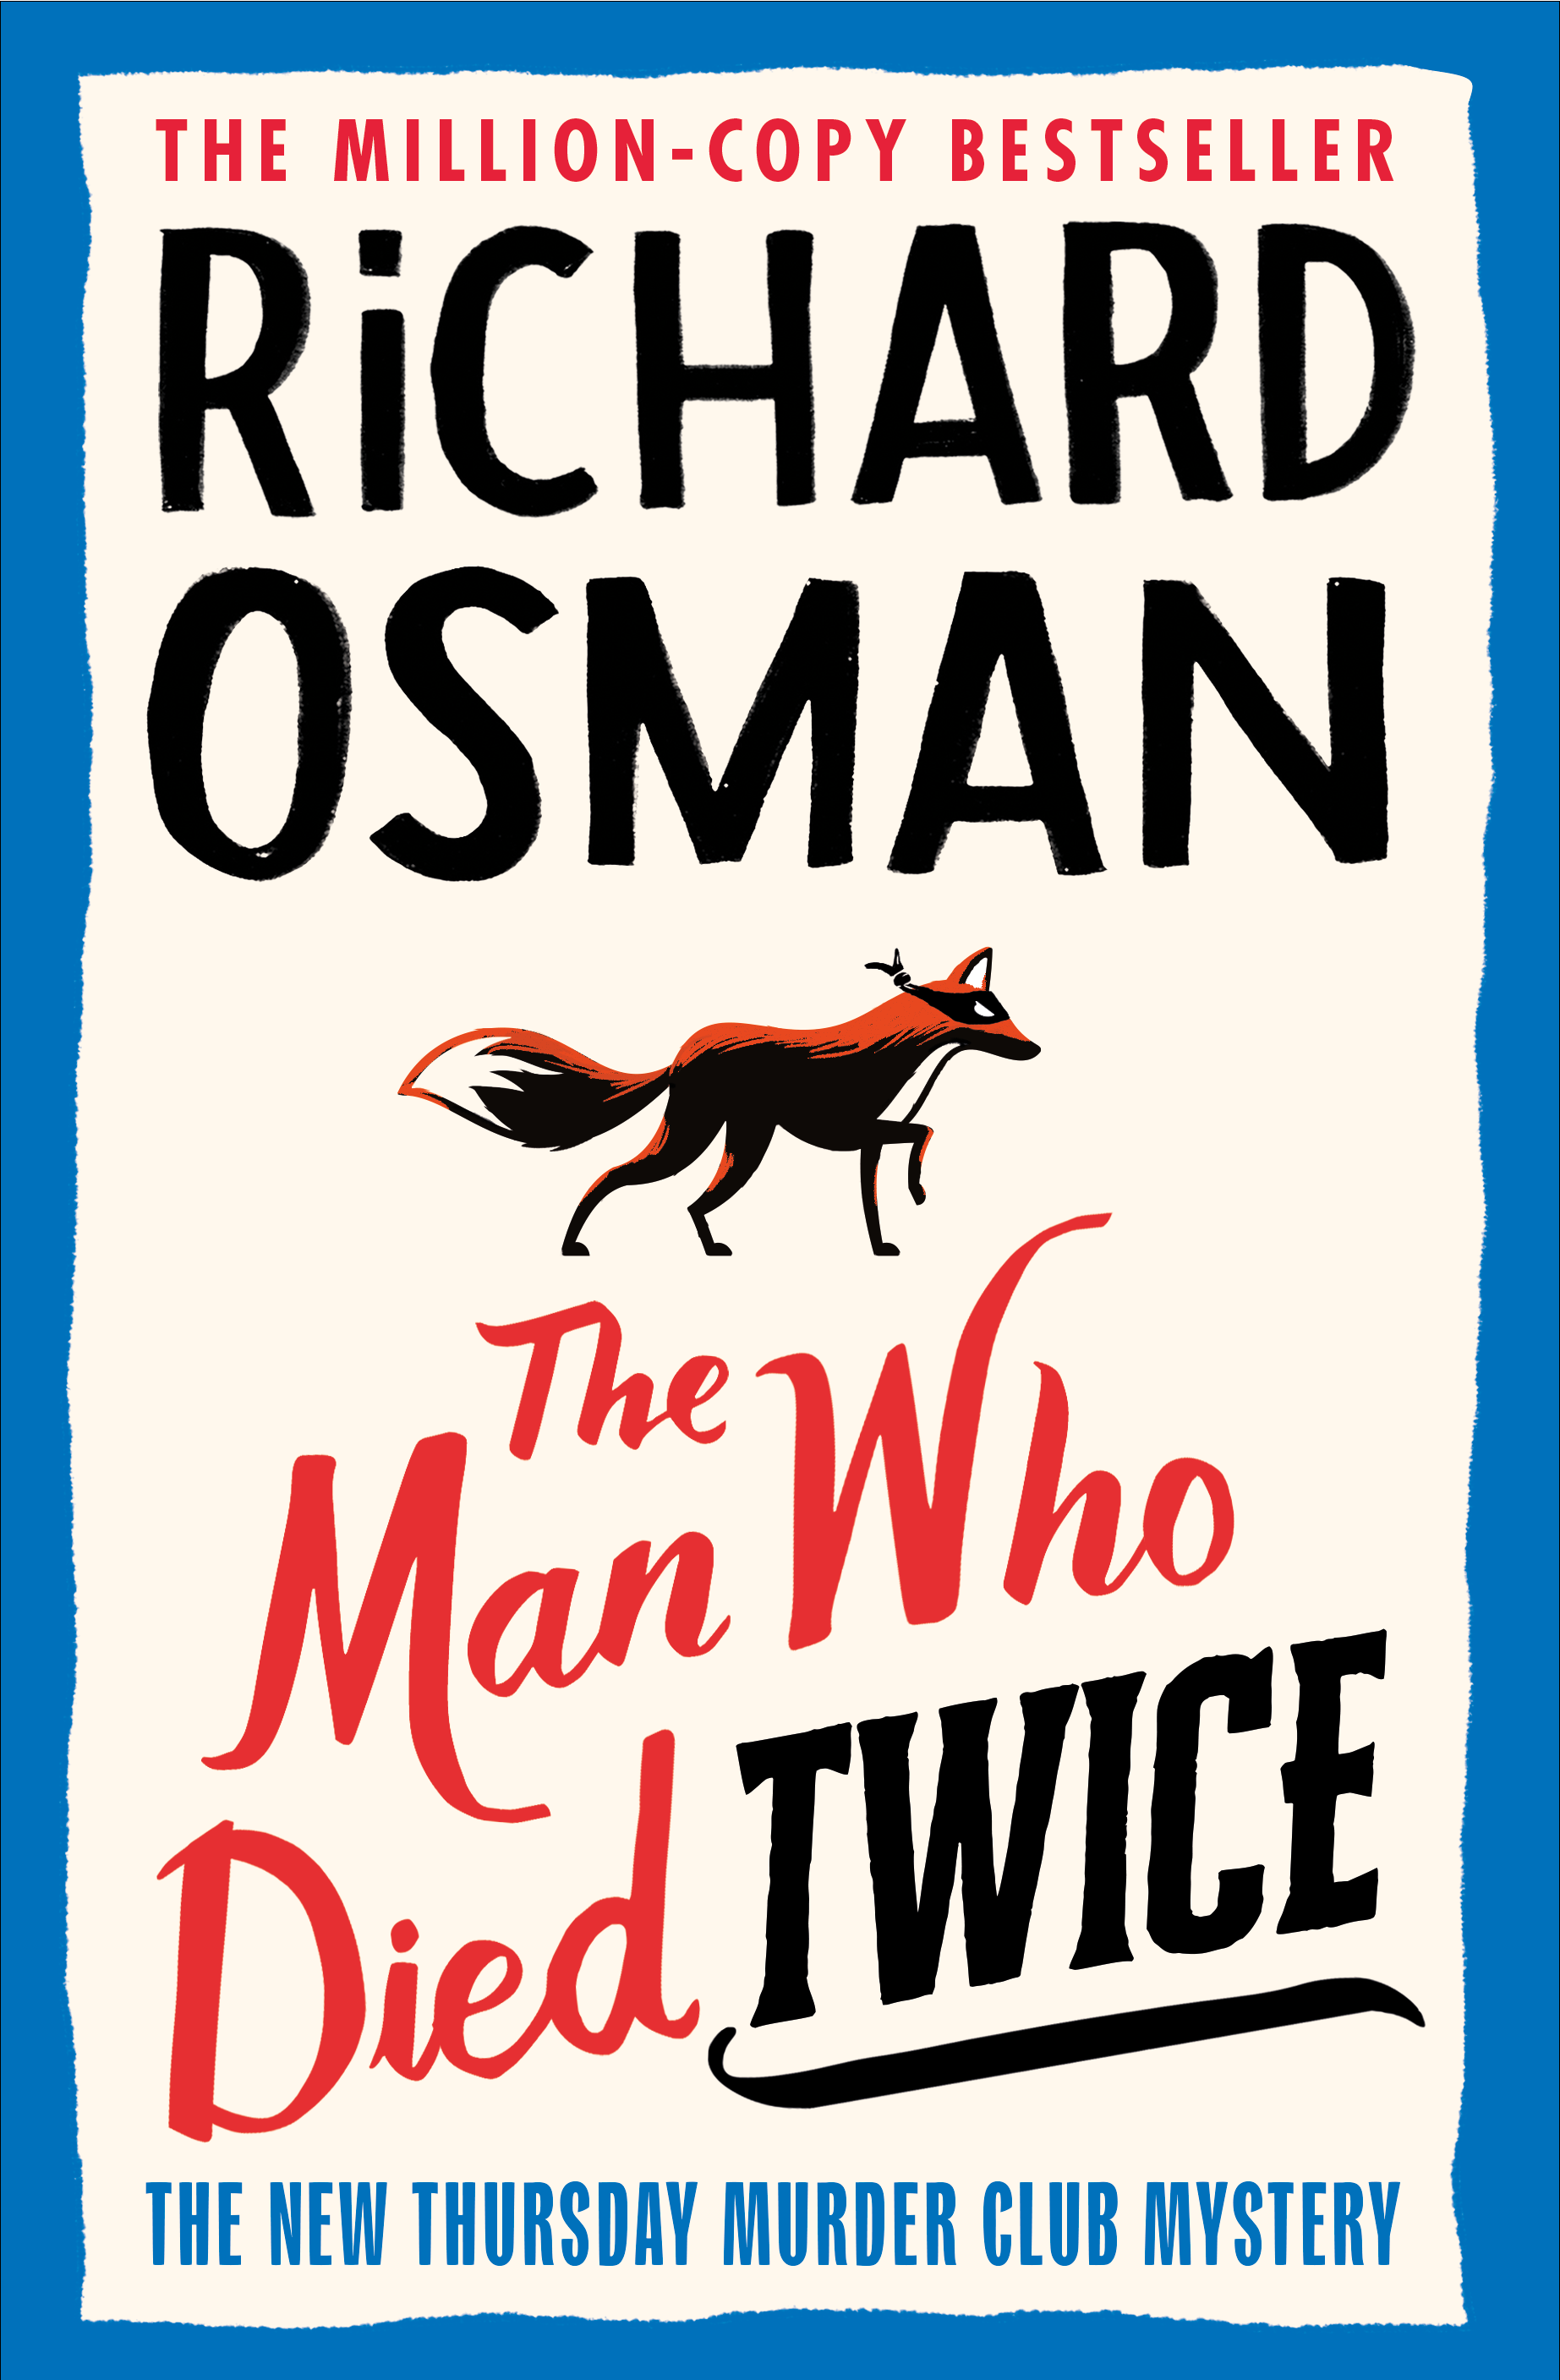 the man who died twice richard osman